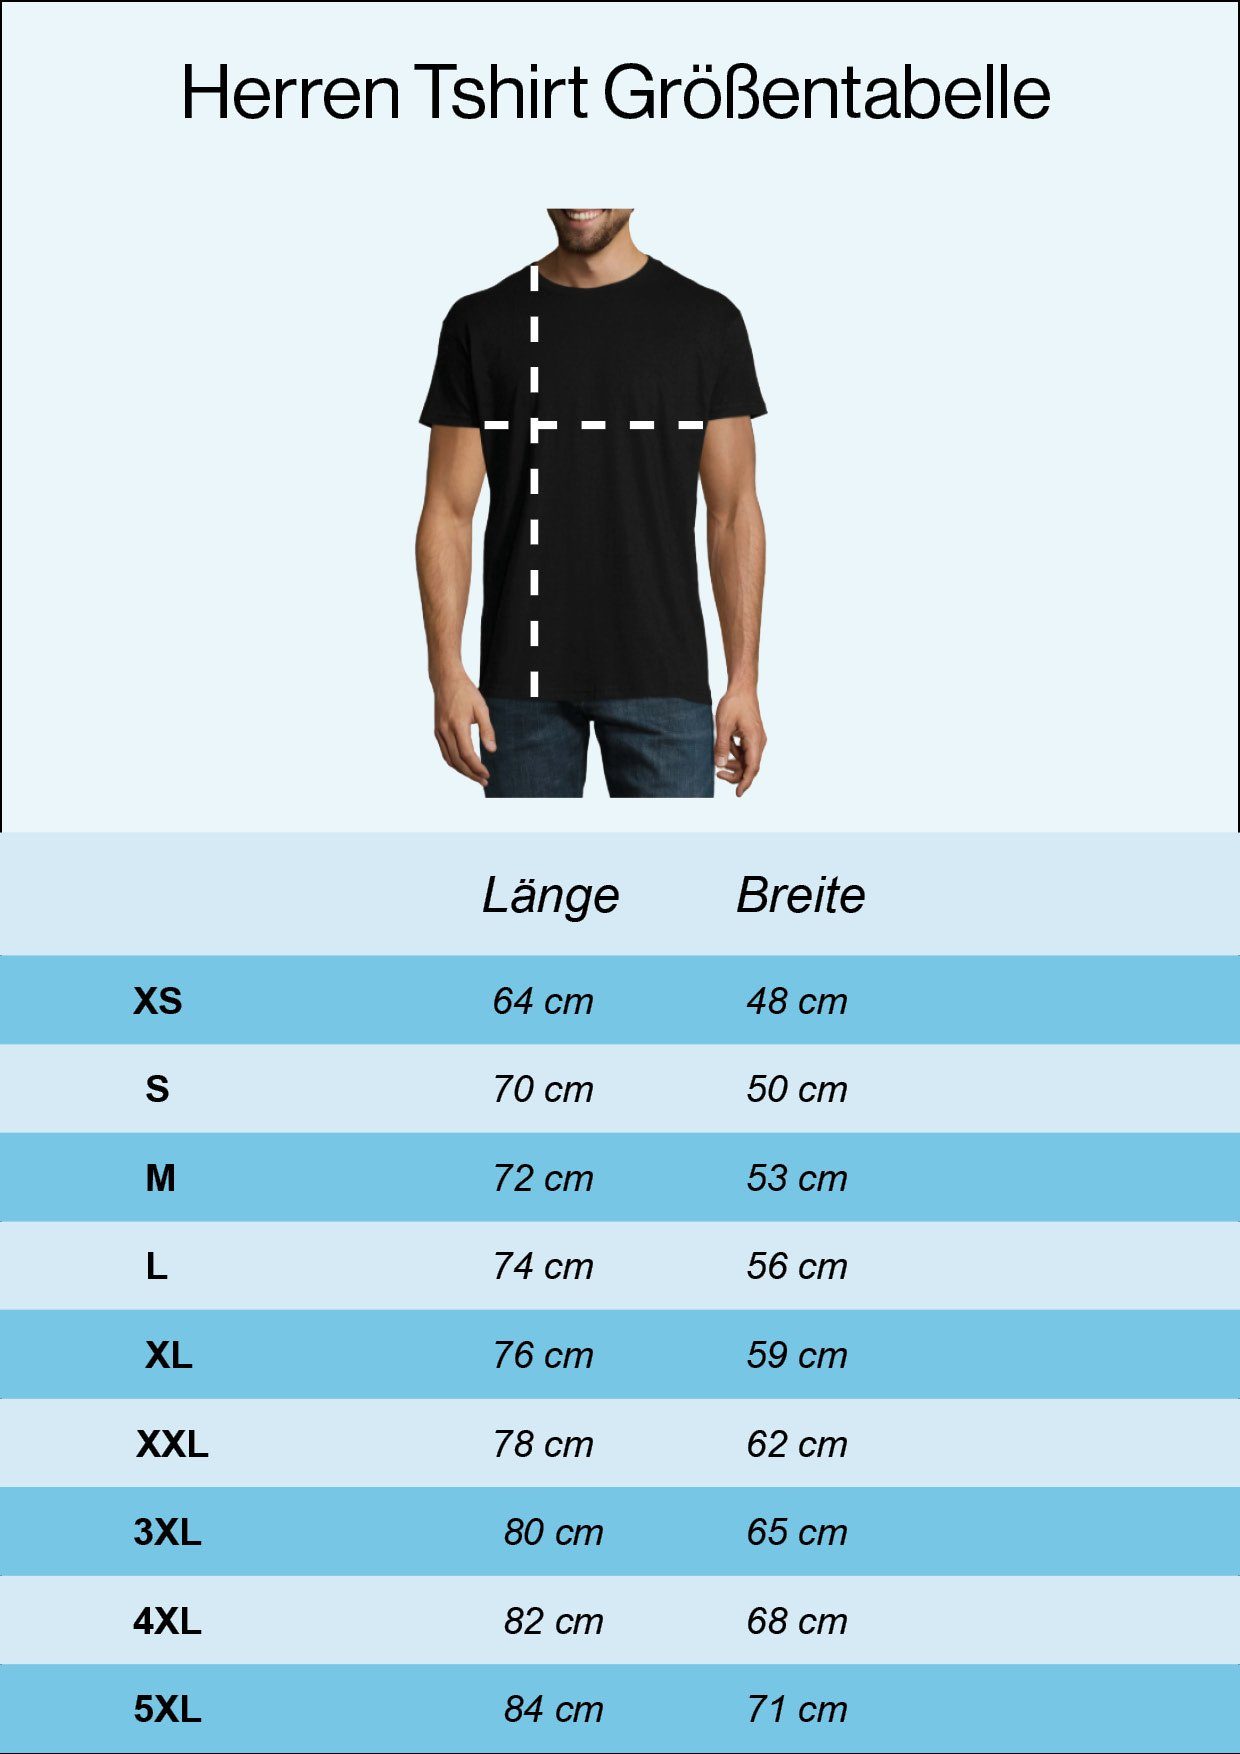 Shirt Herren Motiv Youth Navyblau Gaming-Serien Bang Big Designz trendigem Popart mit T-Shirt